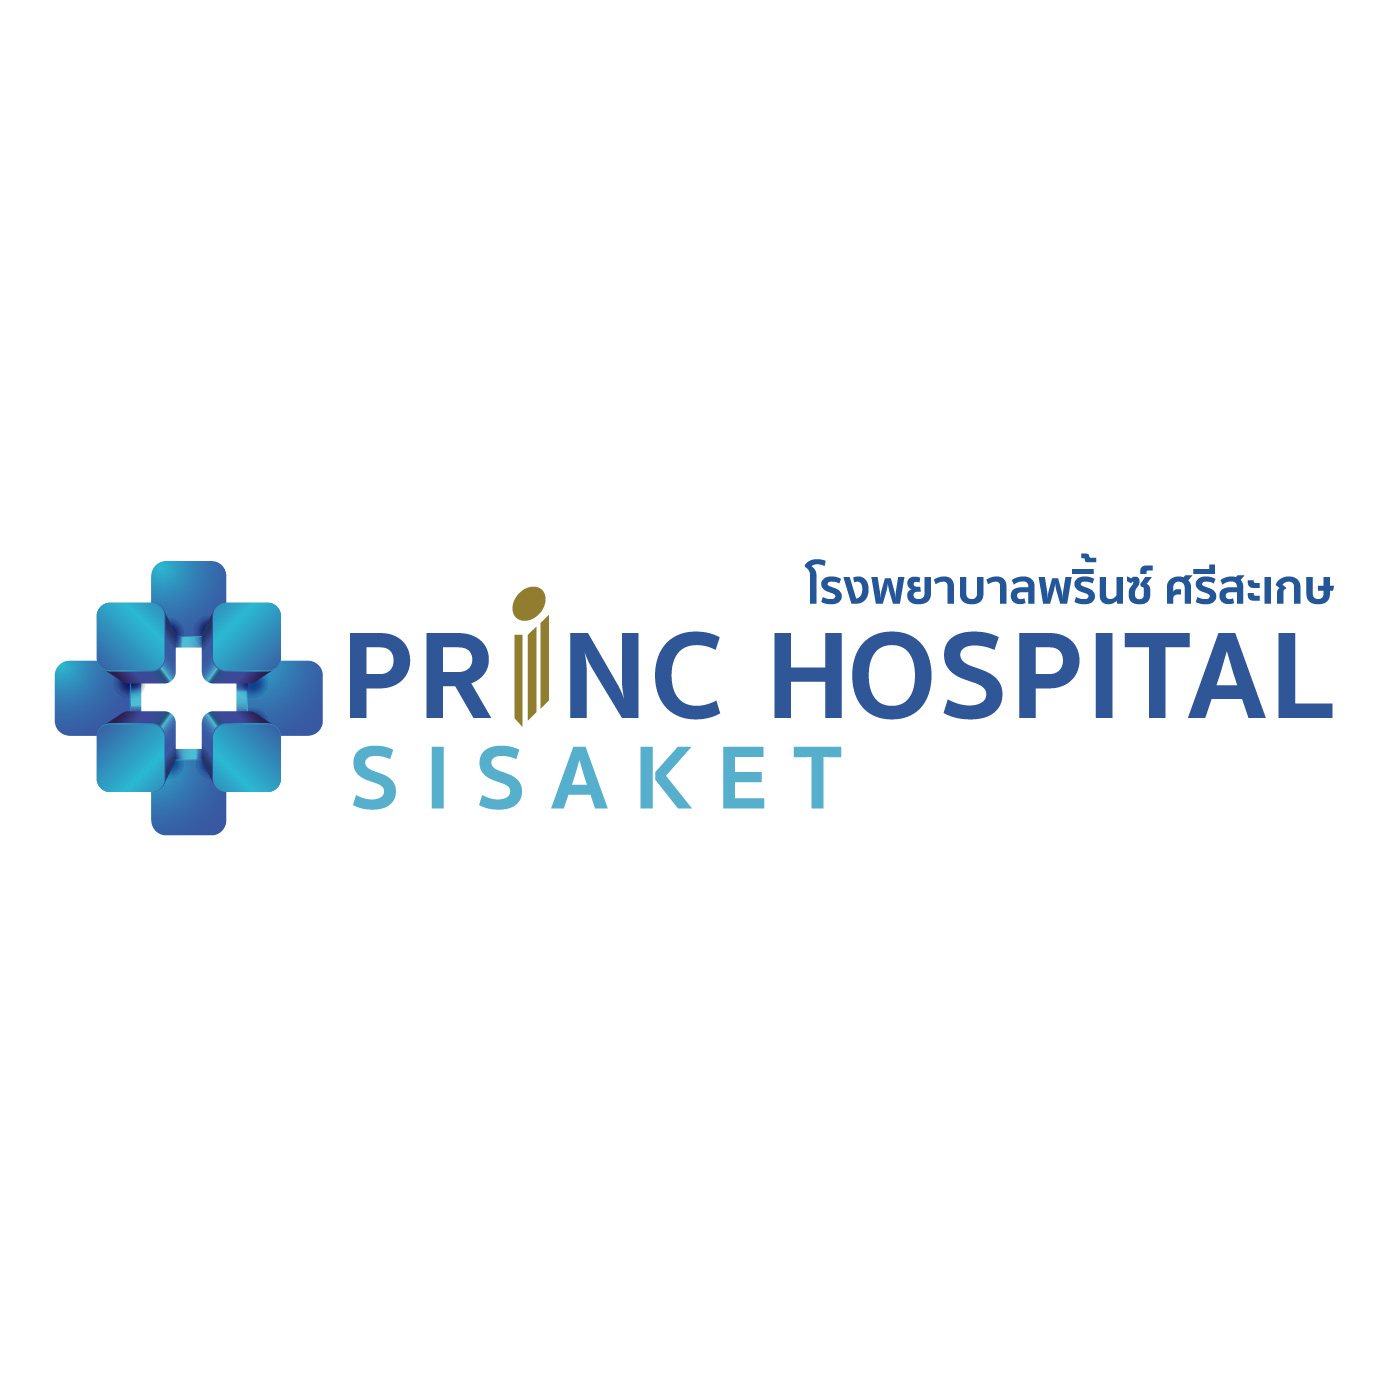 Princ Hospital Sisaket 01